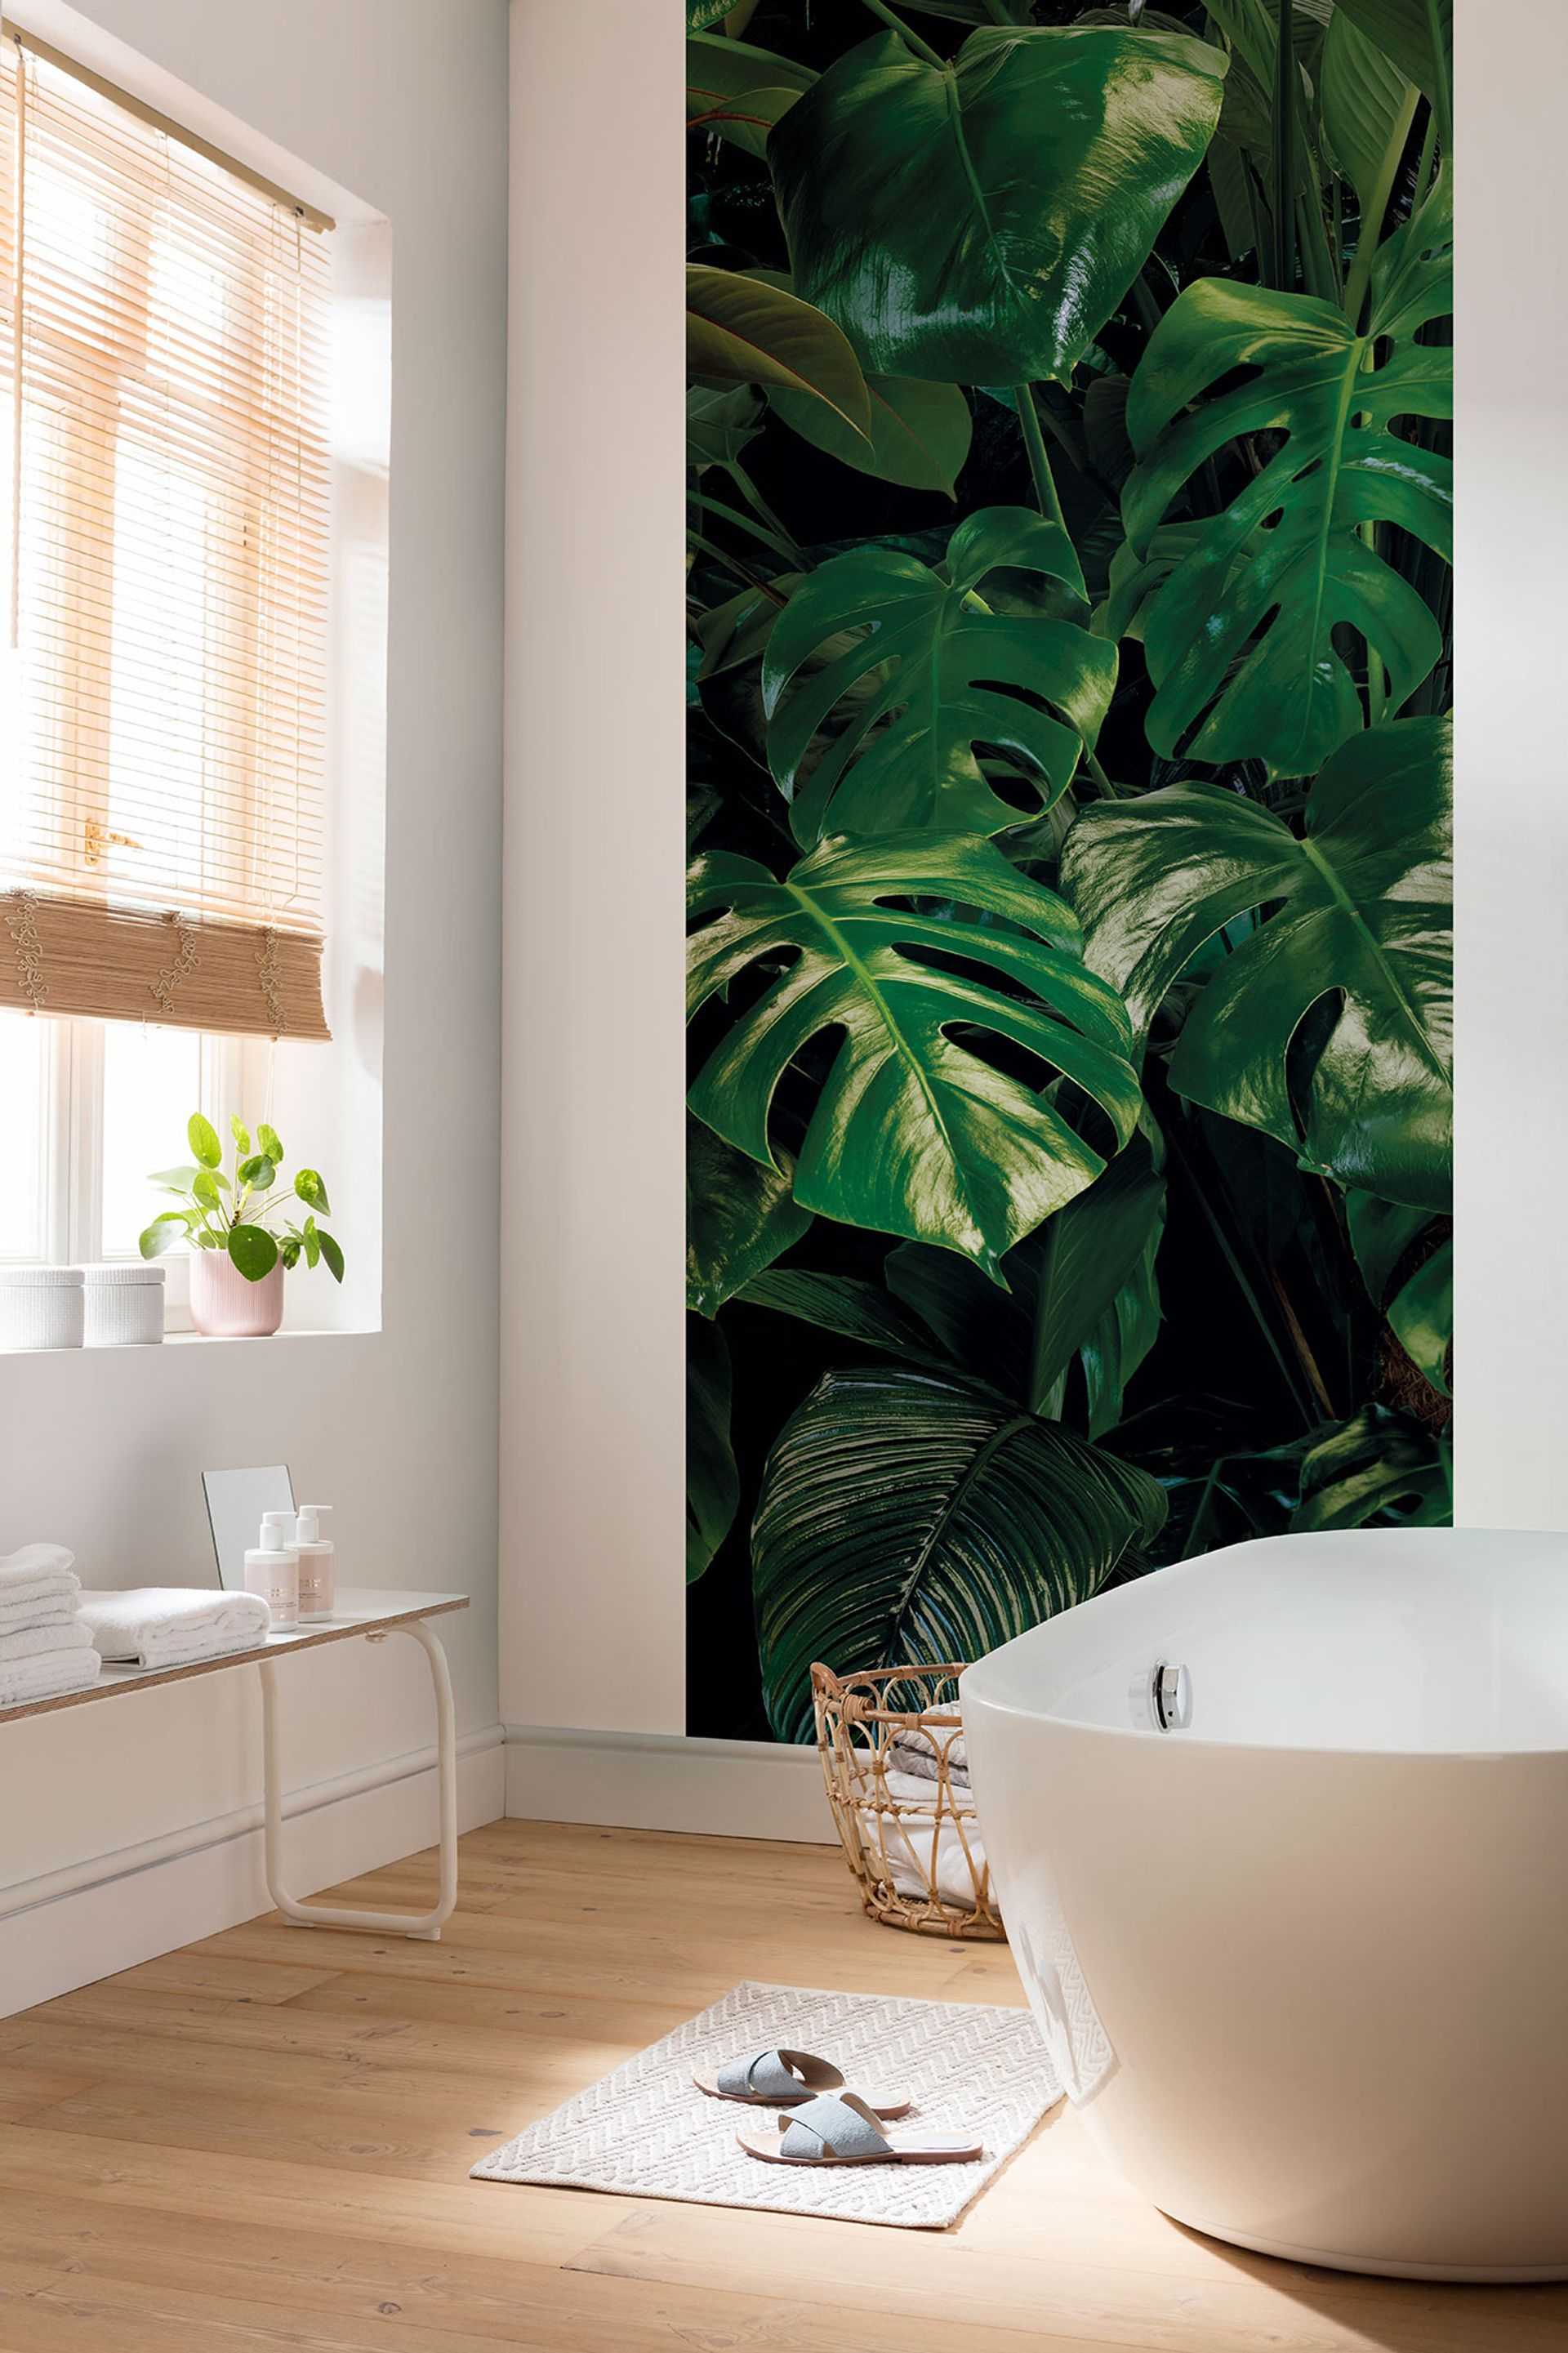 Vlies Fototapete - Tropical Wall Panel - Größe 100 x 250 cm